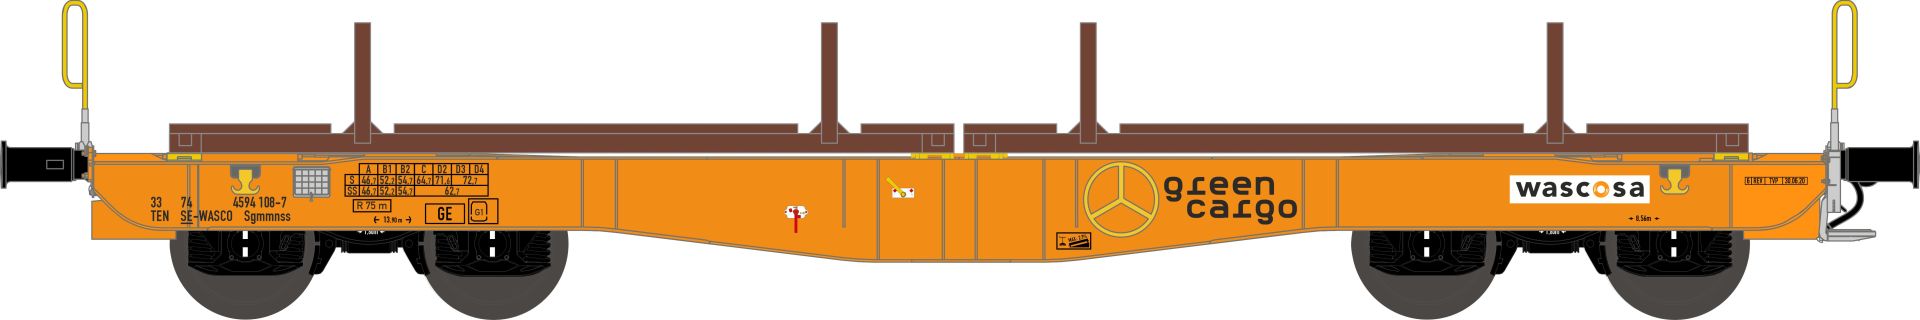 nme 560602 - Containertragwagen 41', WASCOSA - GREEN CARGO, Ep.VI